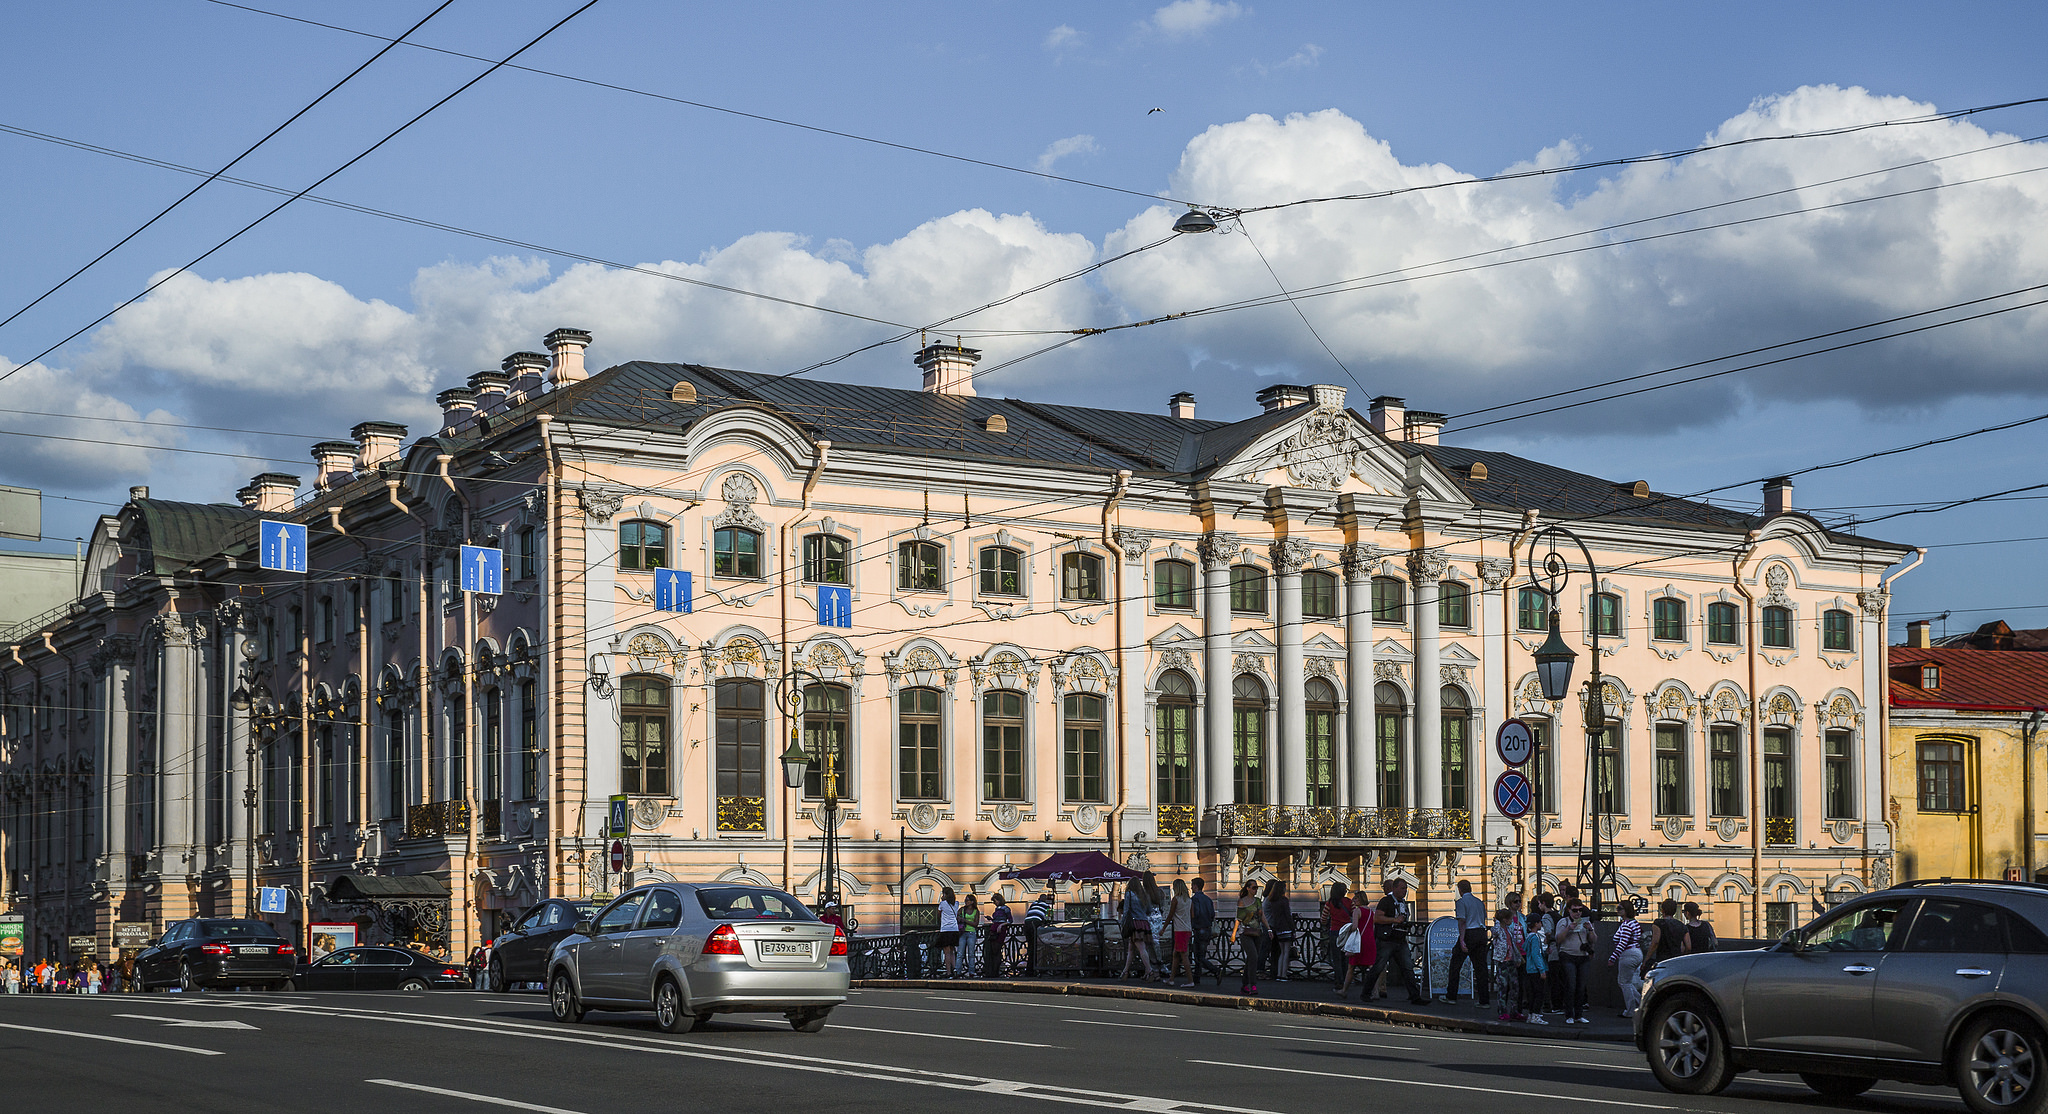 Строгановский дворец в санкт петербурге фото снаружи